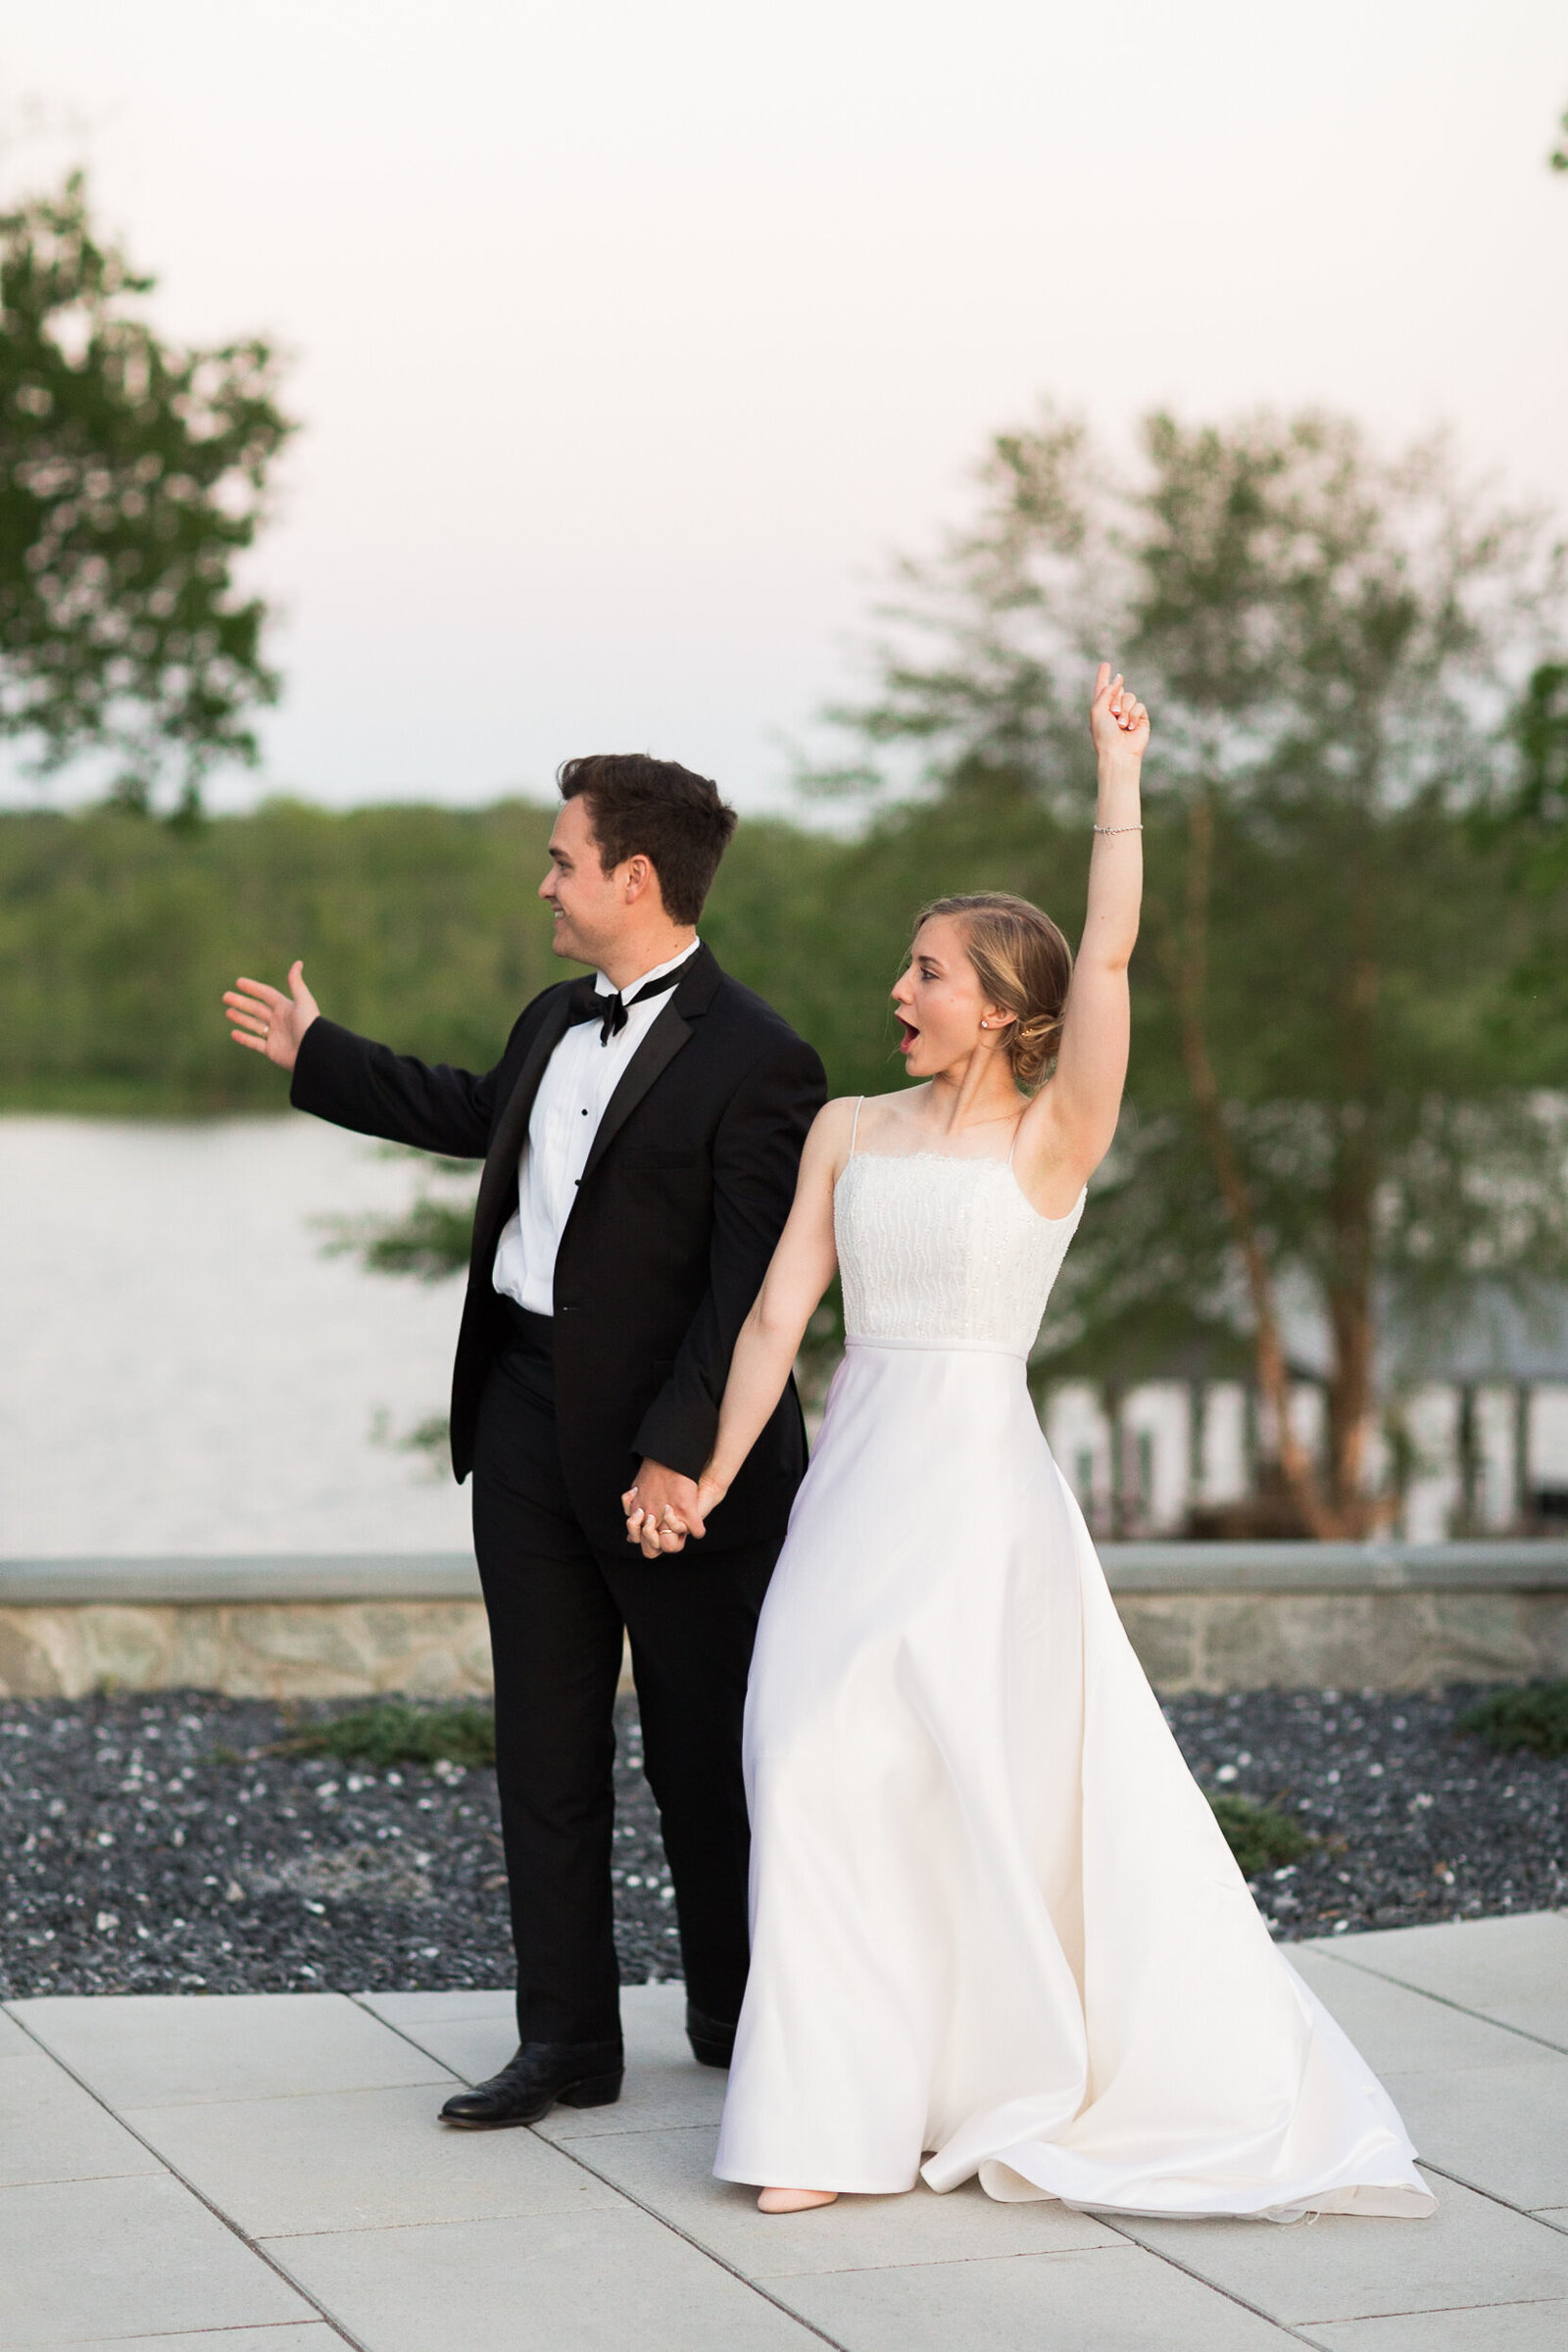 Private riverside estate wedding on the river in Virginia